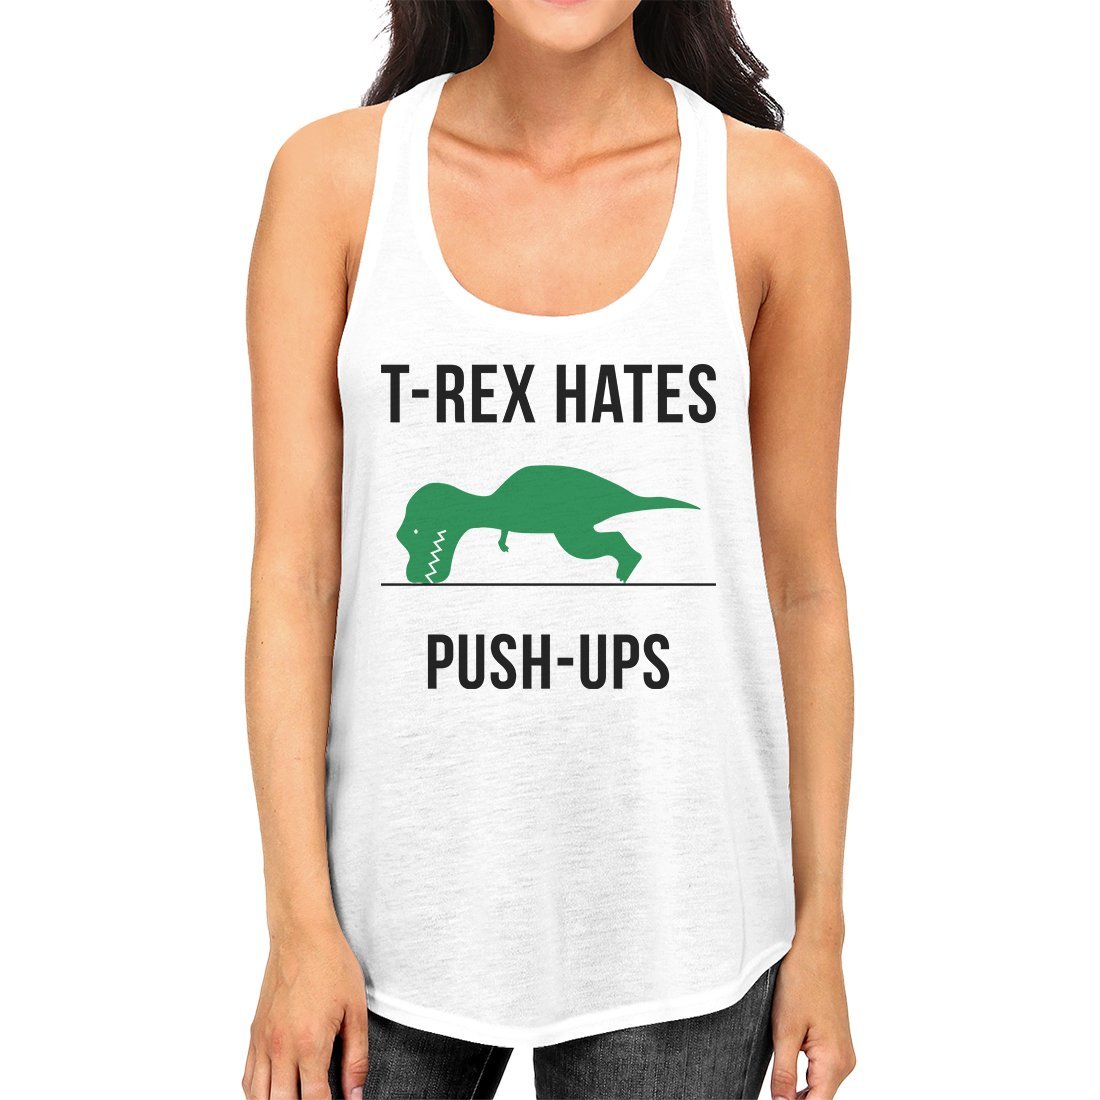 https://cdn.shopify.com/s/files/1/1894/7355/products/t-rex-push-ups-womens-fashion-lightweight-workout-tank-top-for-her-tsf-design-986547.jpg?v=1619663457